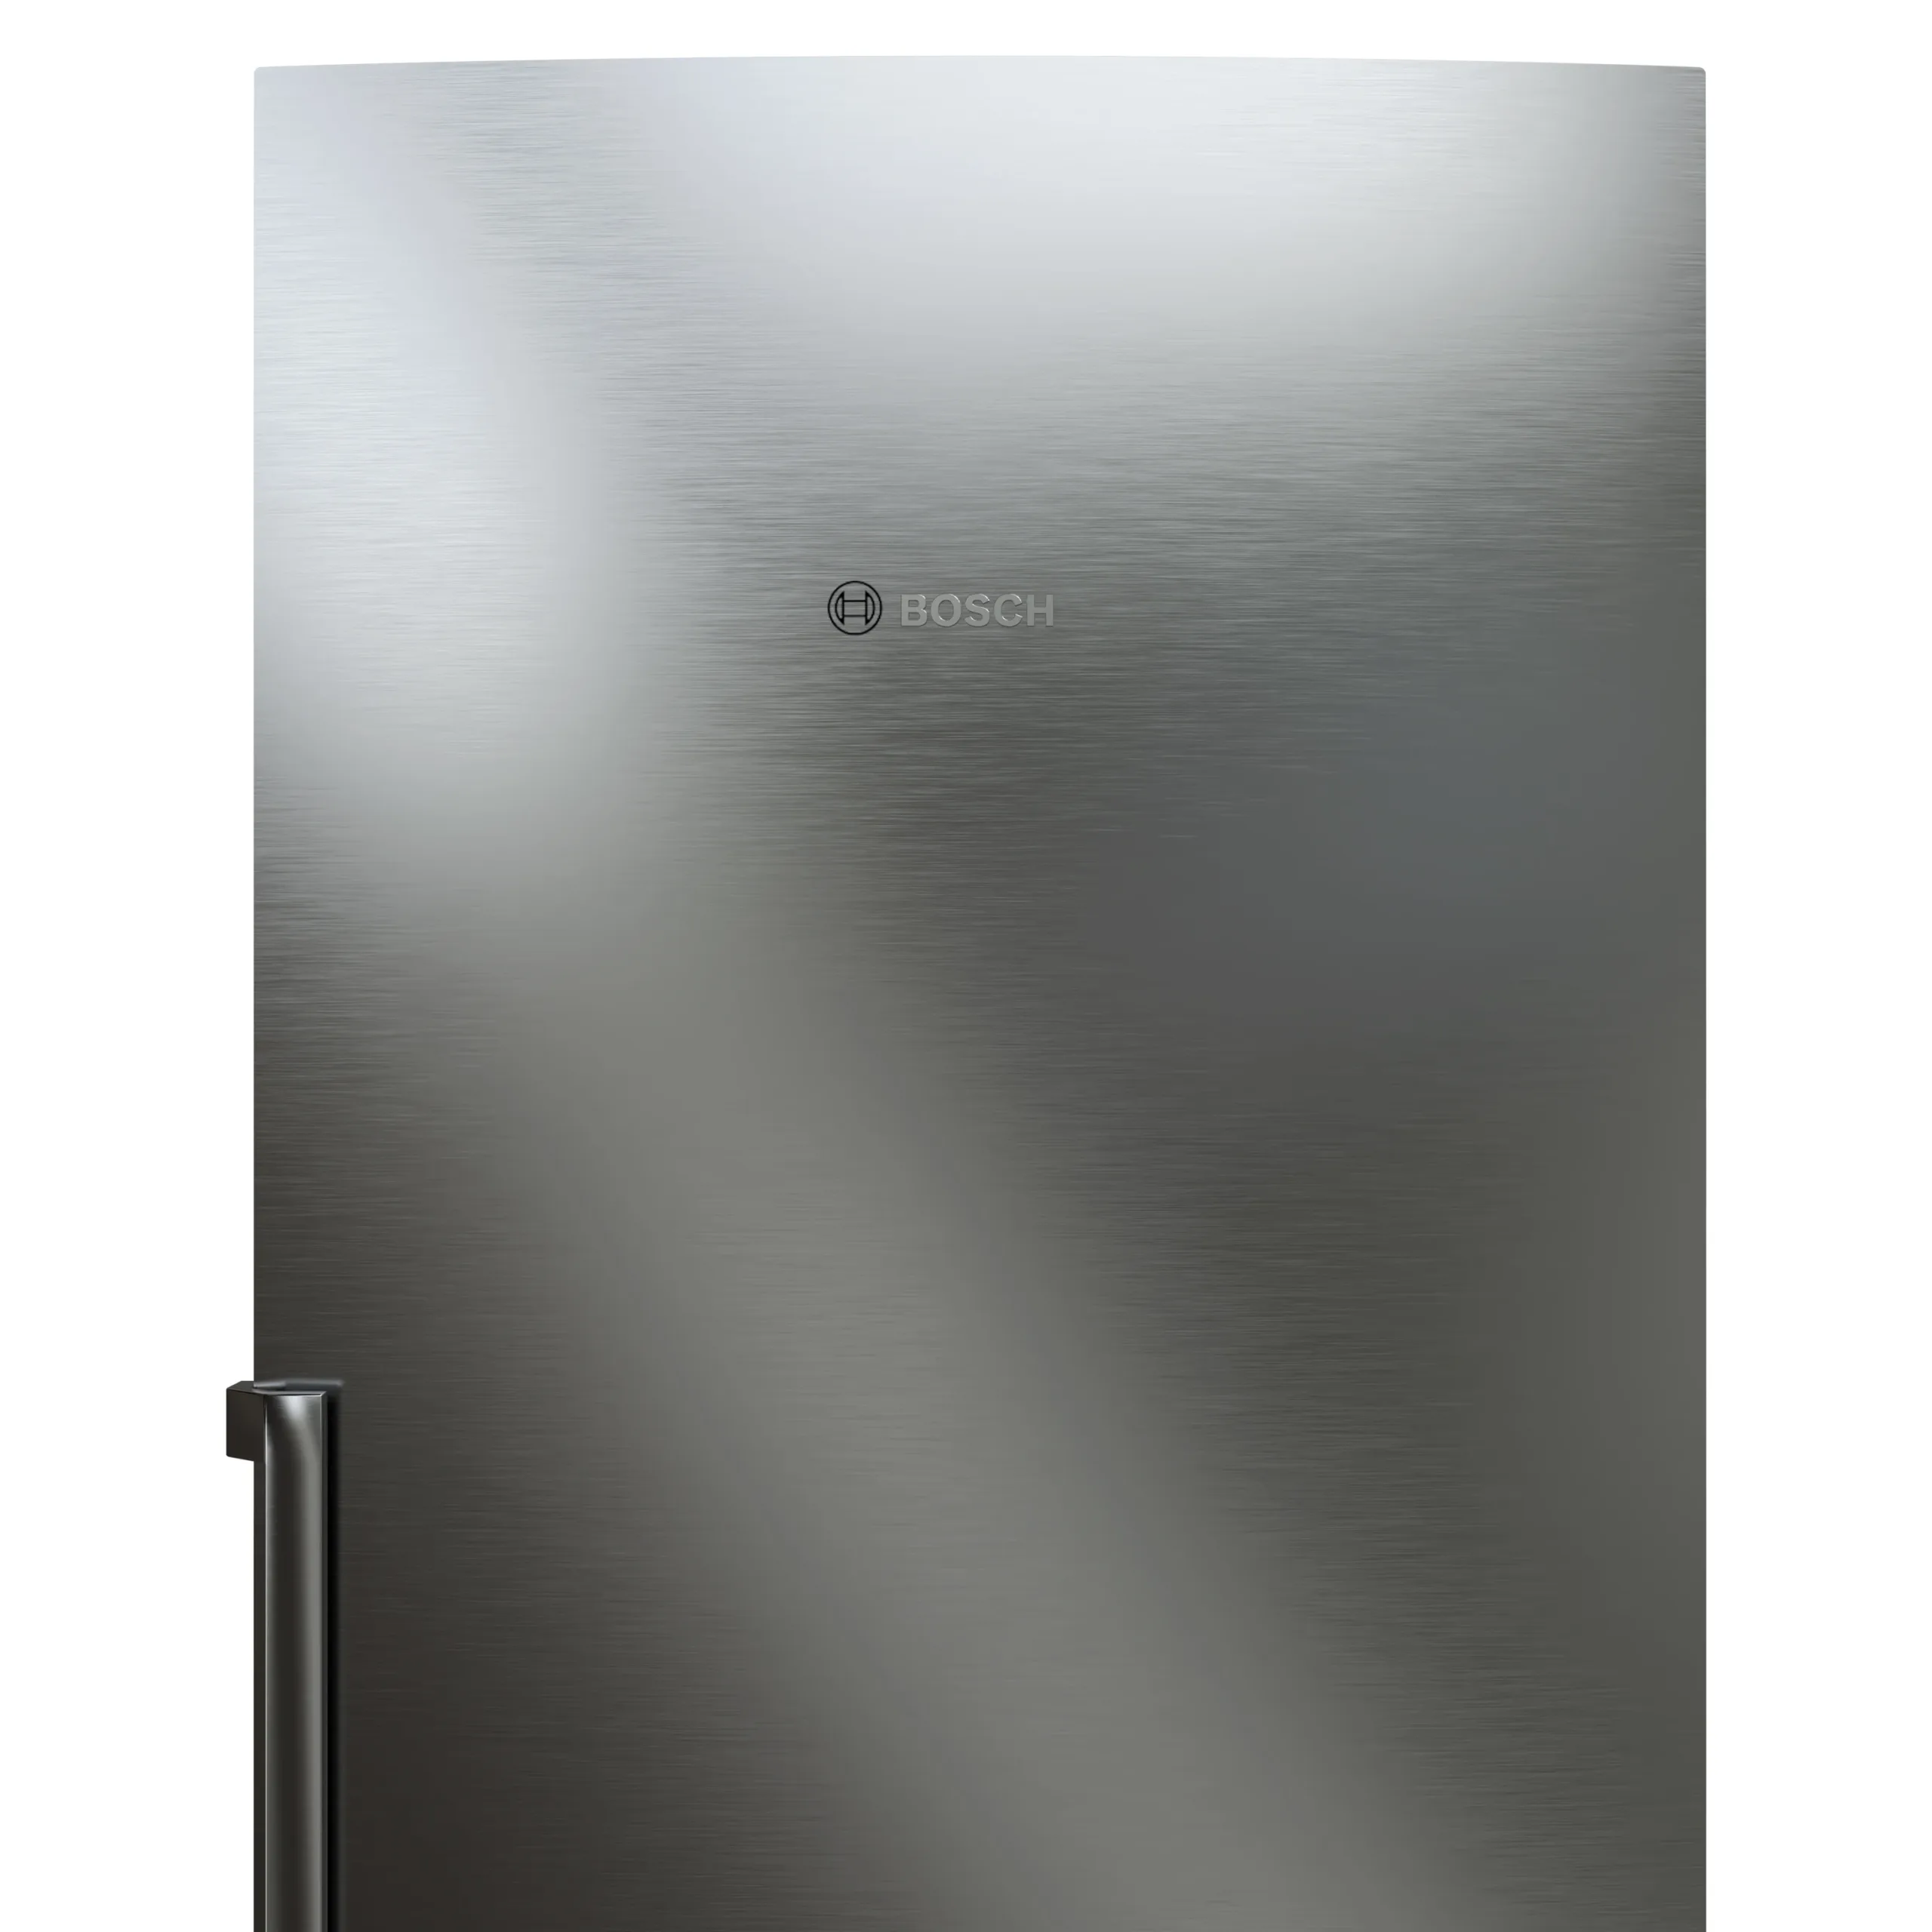 Bosch Refrigerator Collection